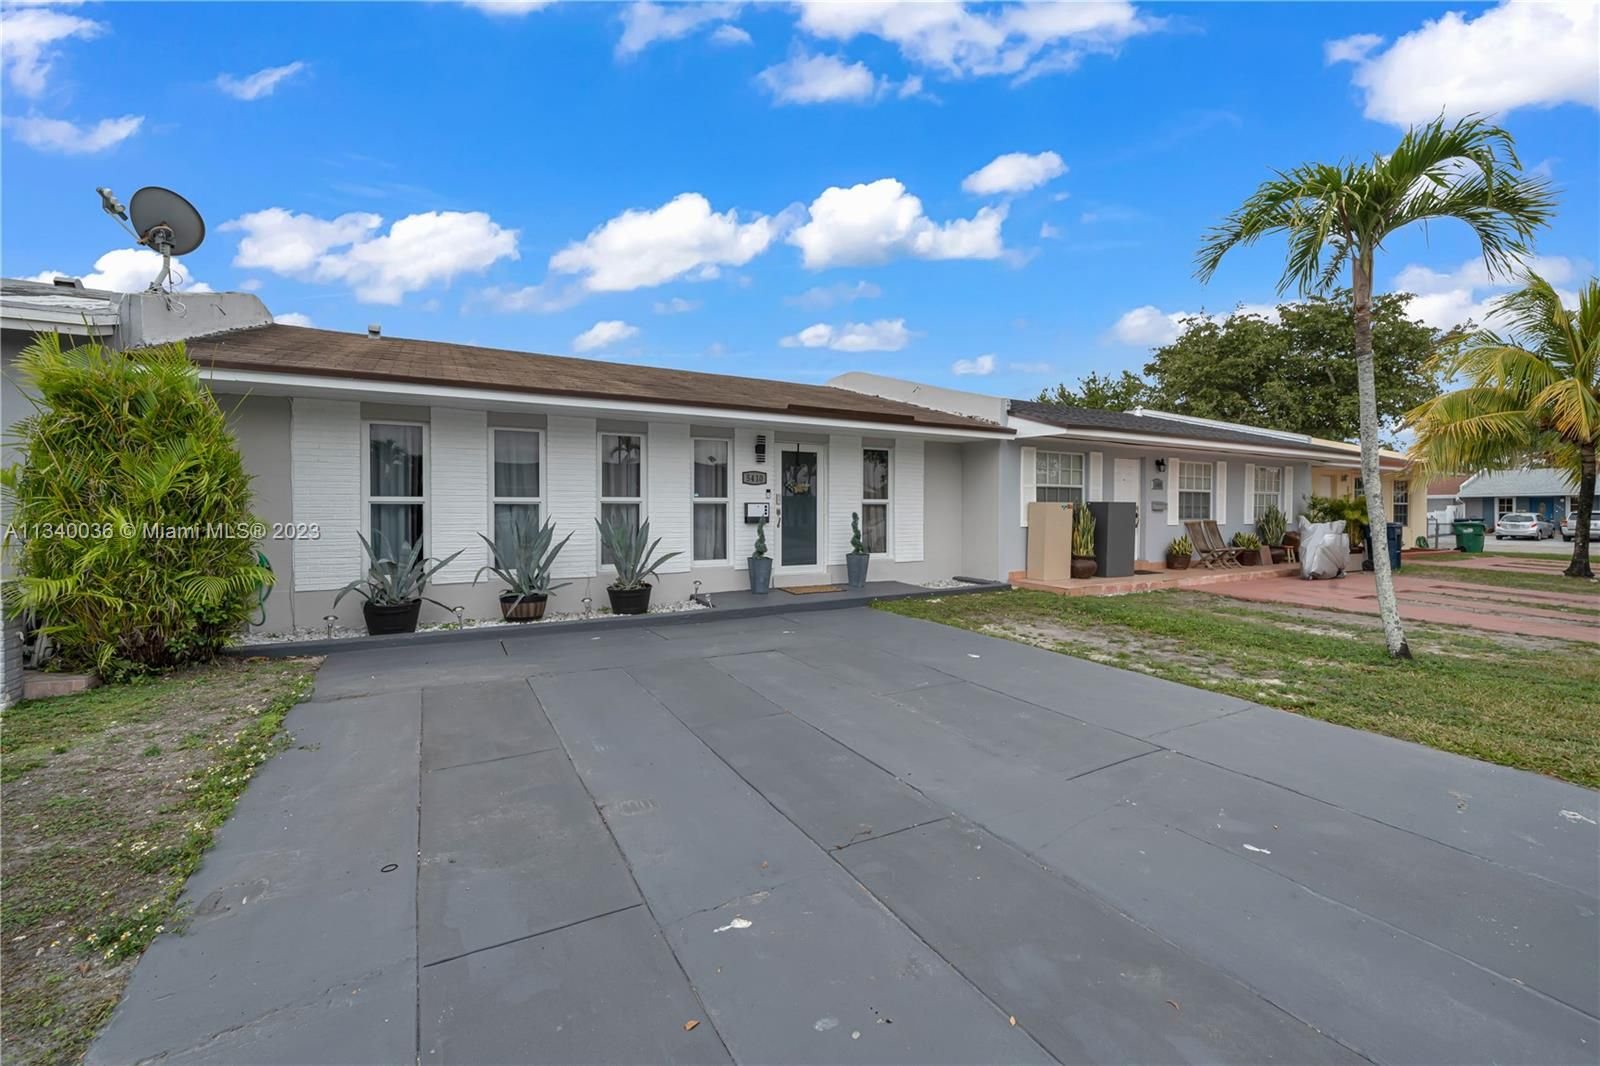 Real estate property located at 5410 128th Ave ., Miami-Dade County, Miami, FL